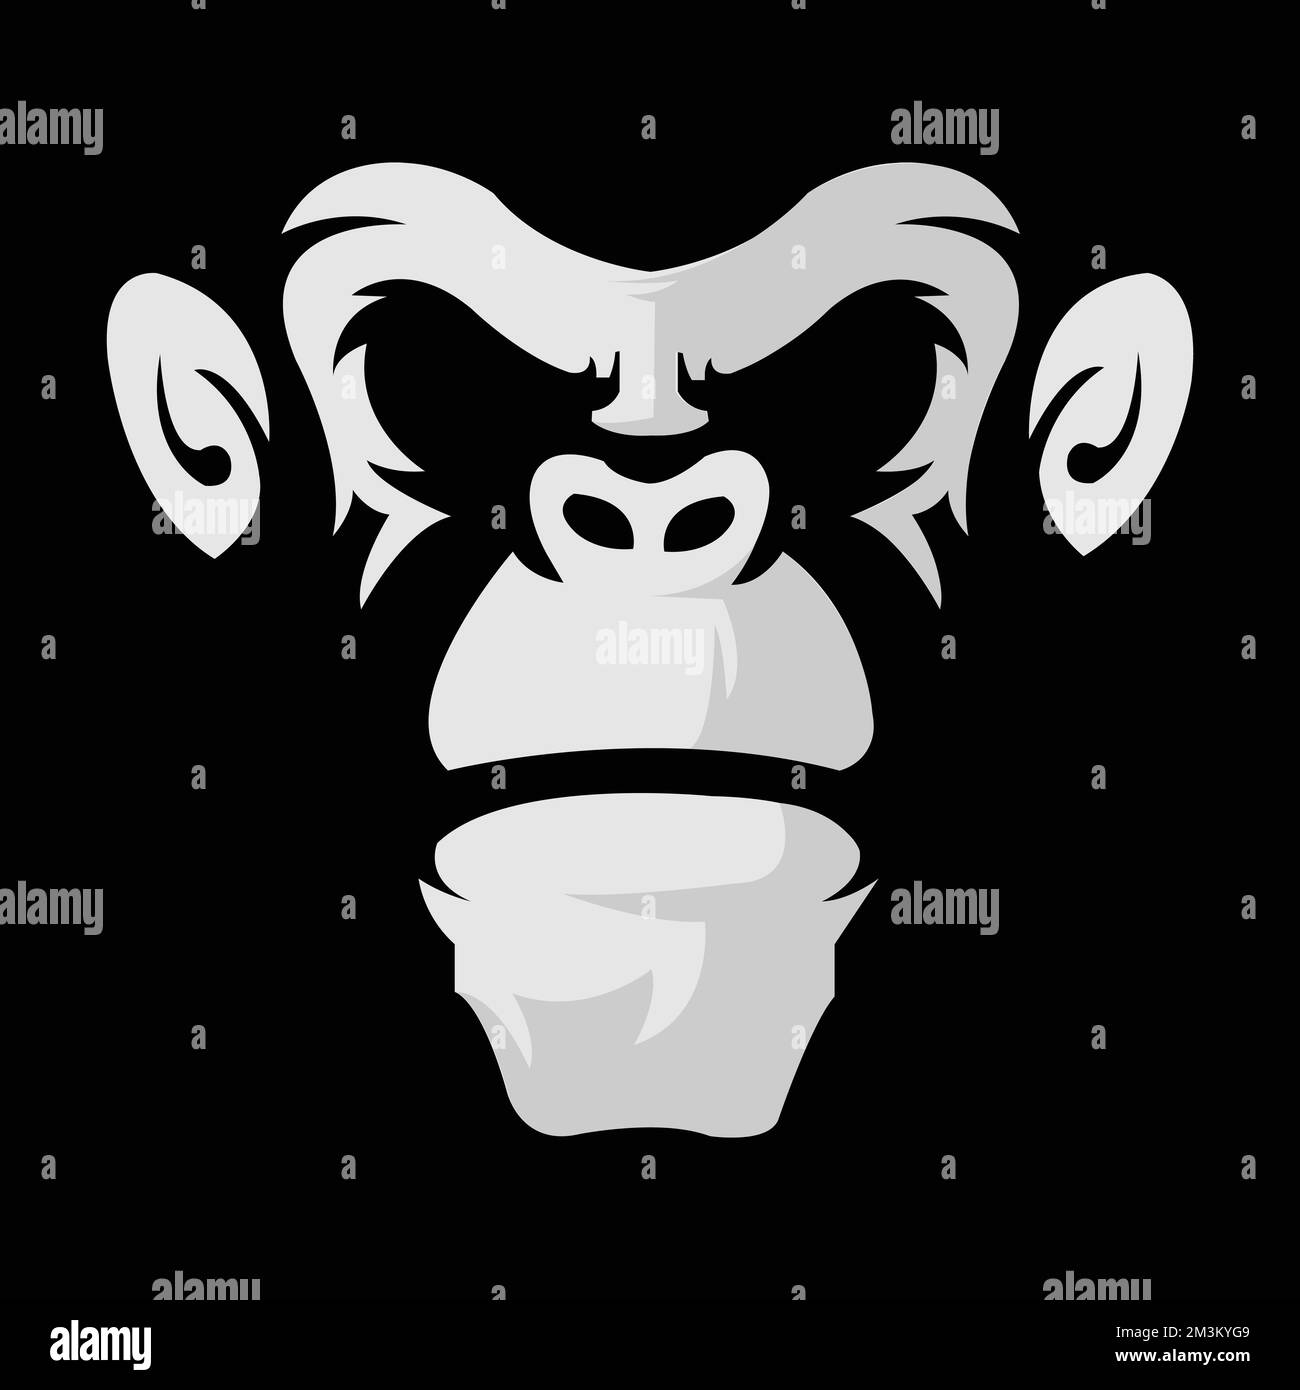 angry gorilla head logo template vector. Monkey face logo template vector.EPS 10 Stock Vector